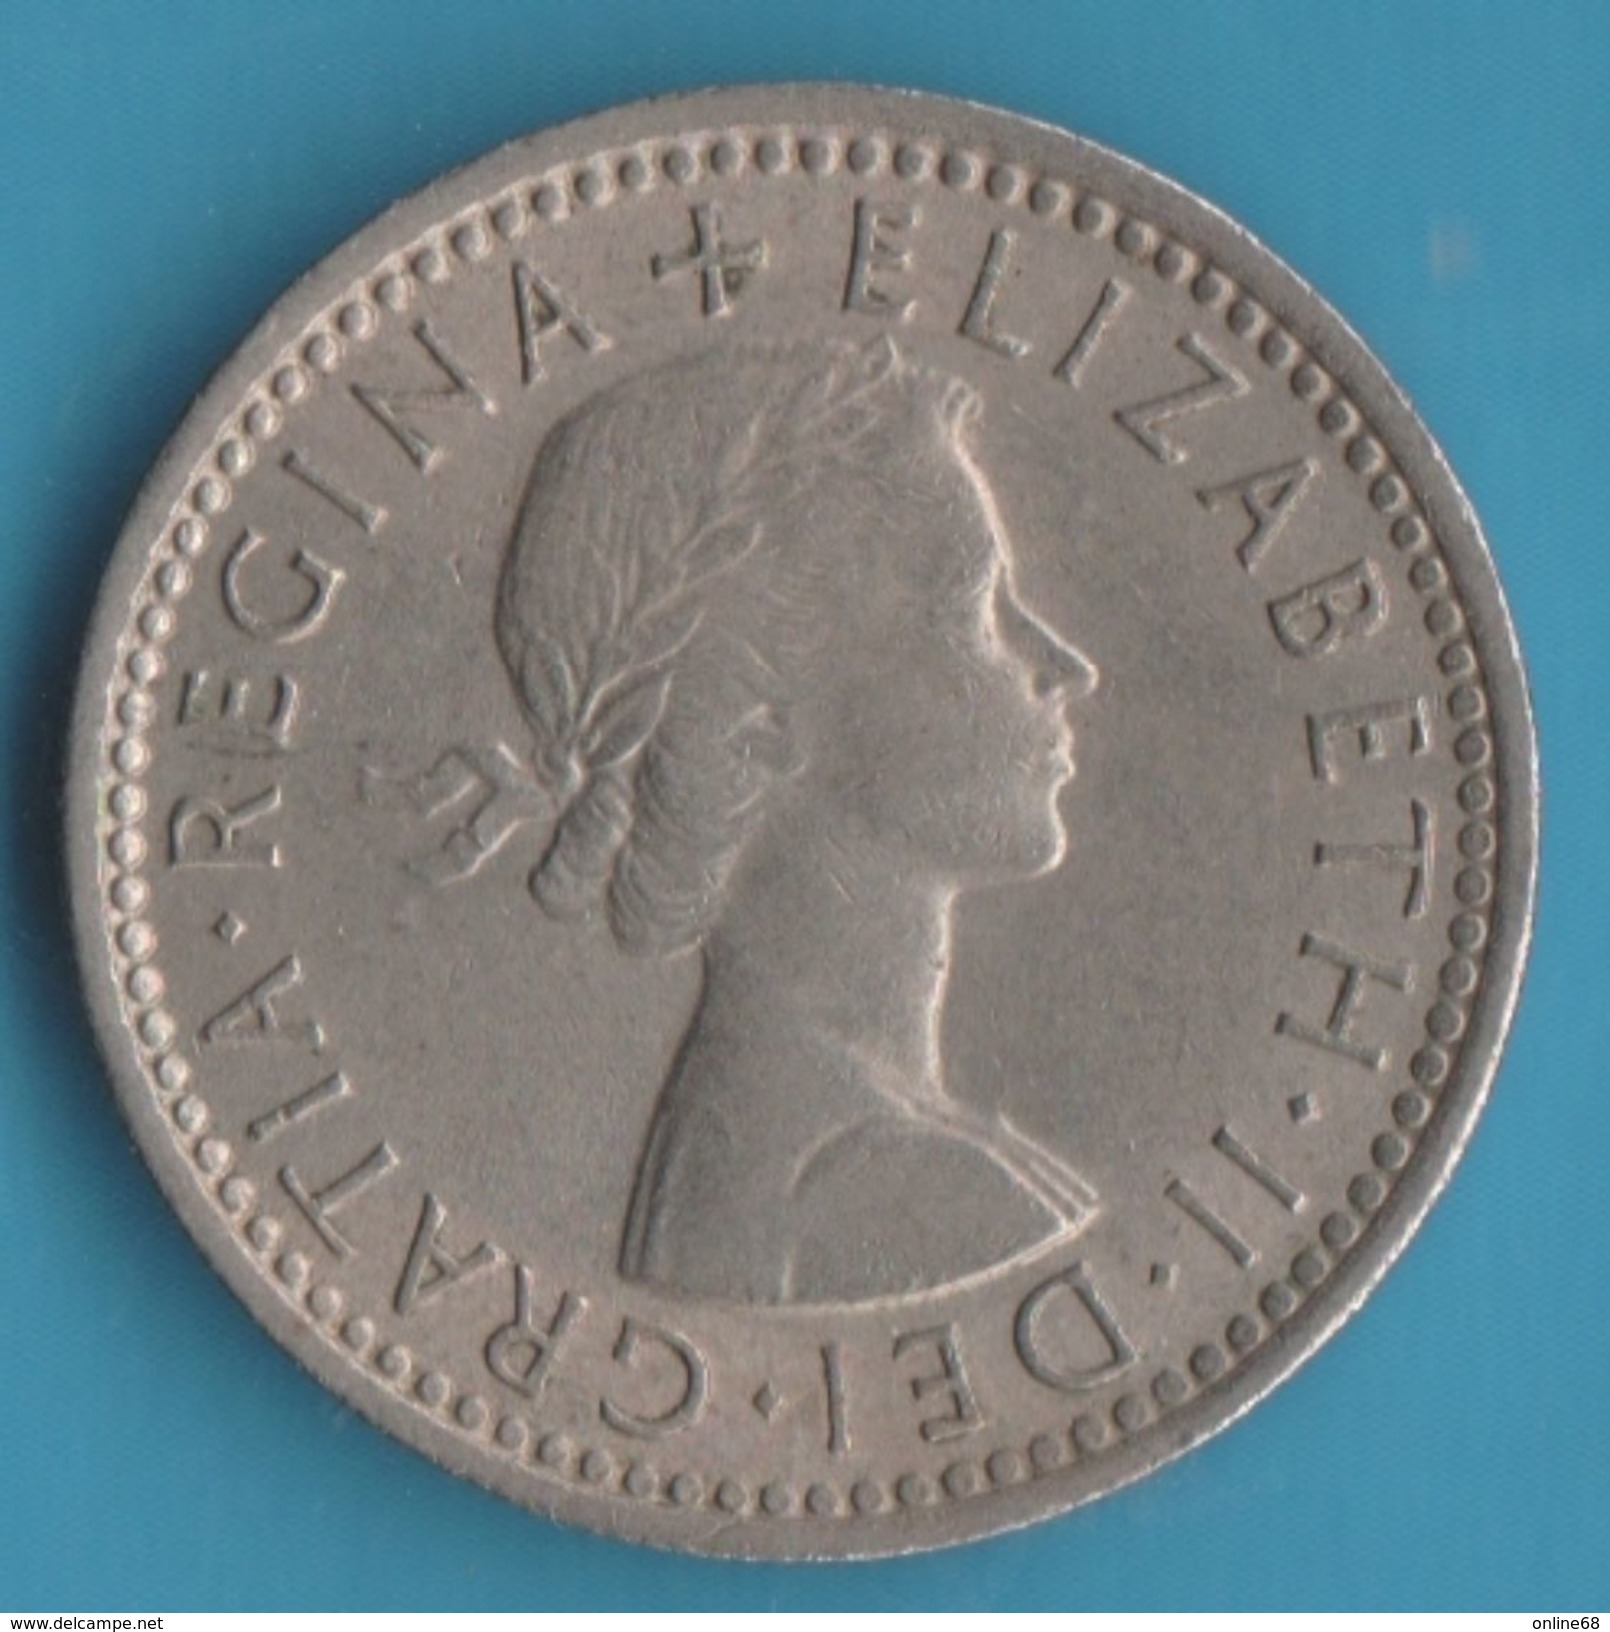 UK 6 PENCE 1960 KM# 903 Elizabeth II - H. 6 Pence